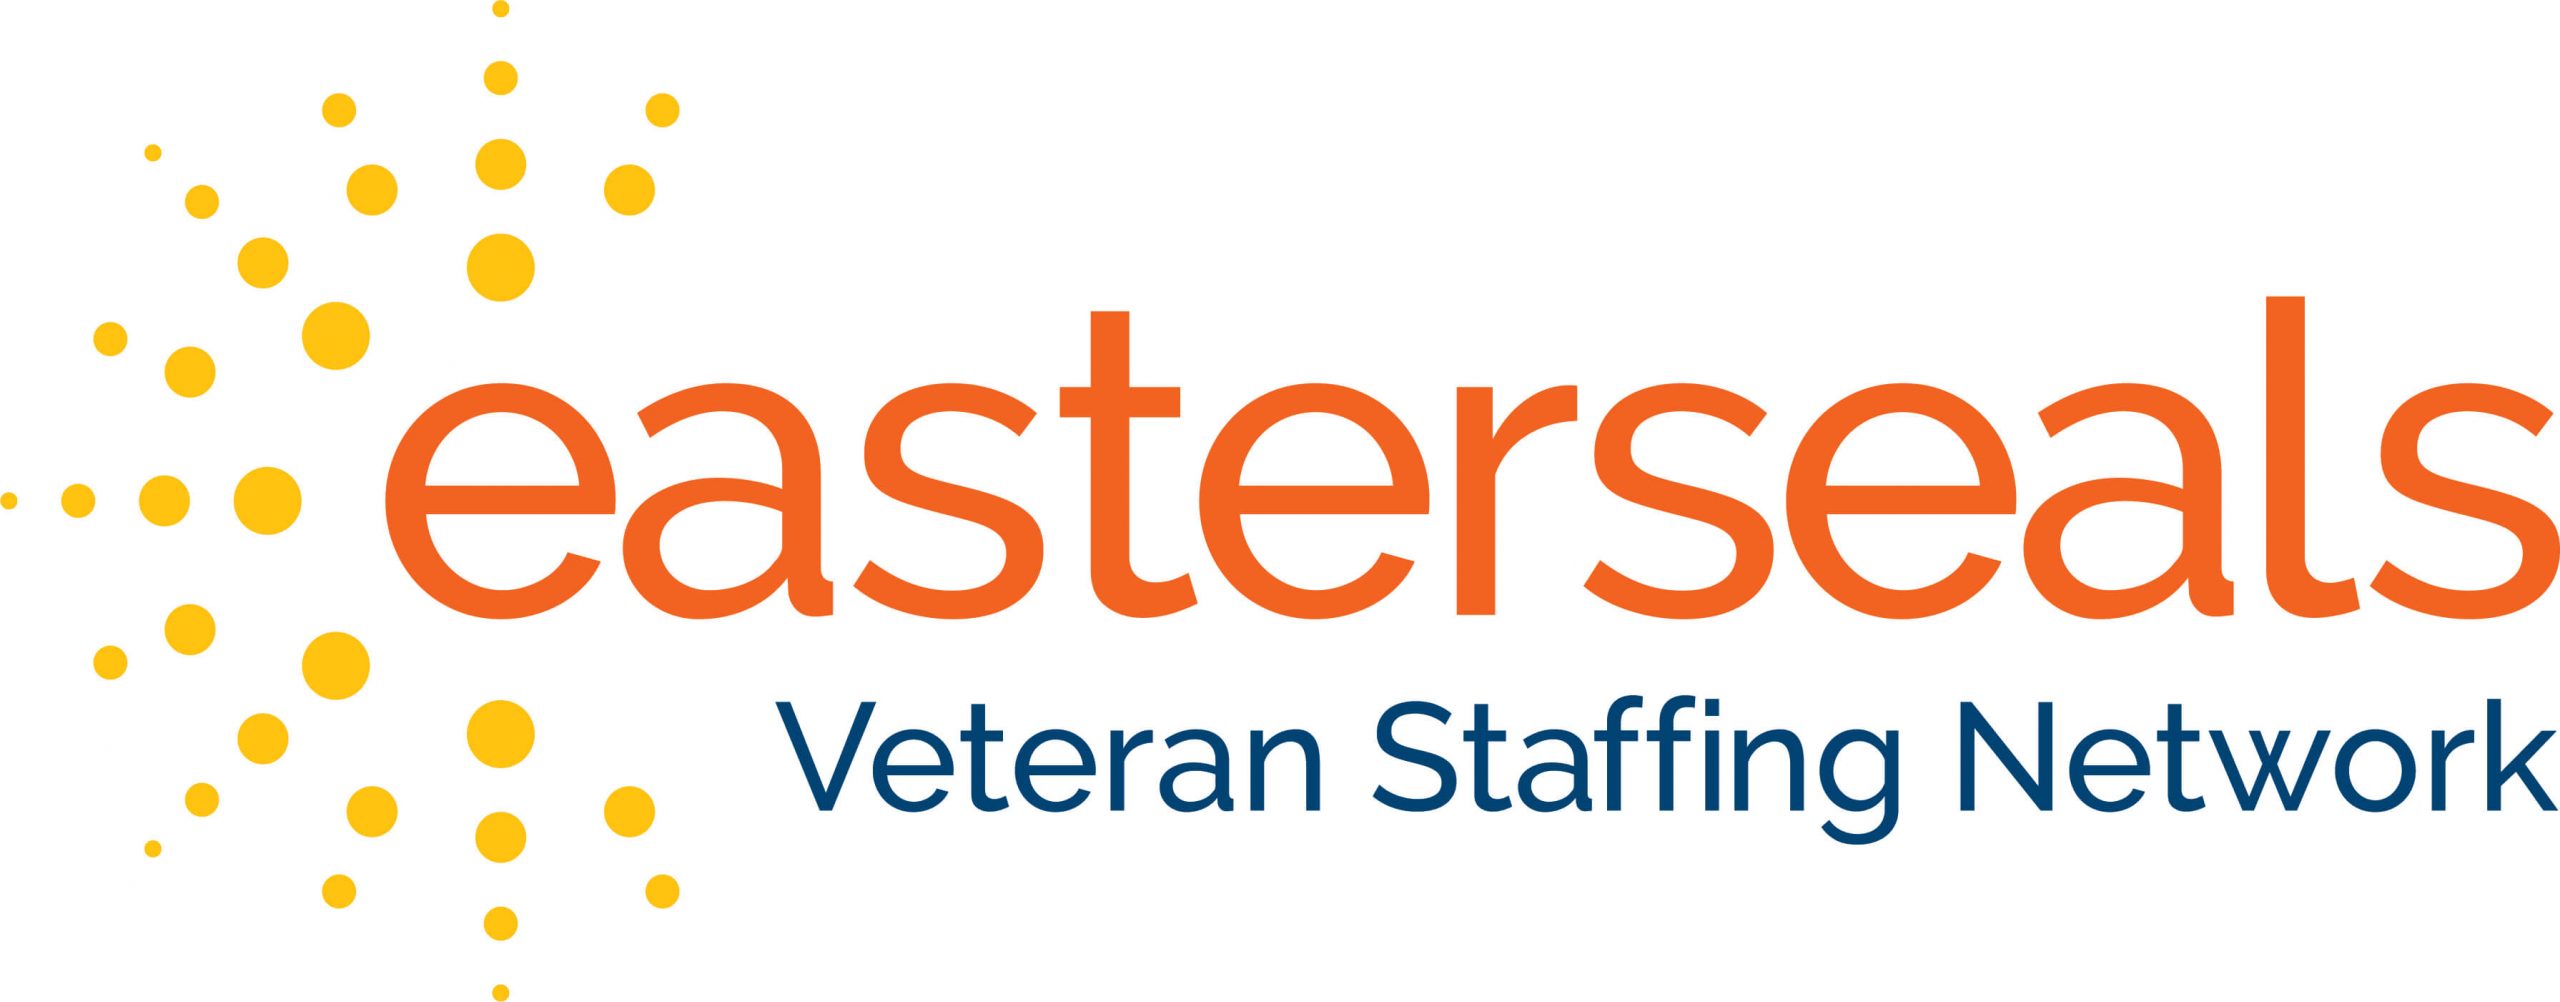 Easterseals VSN Logo